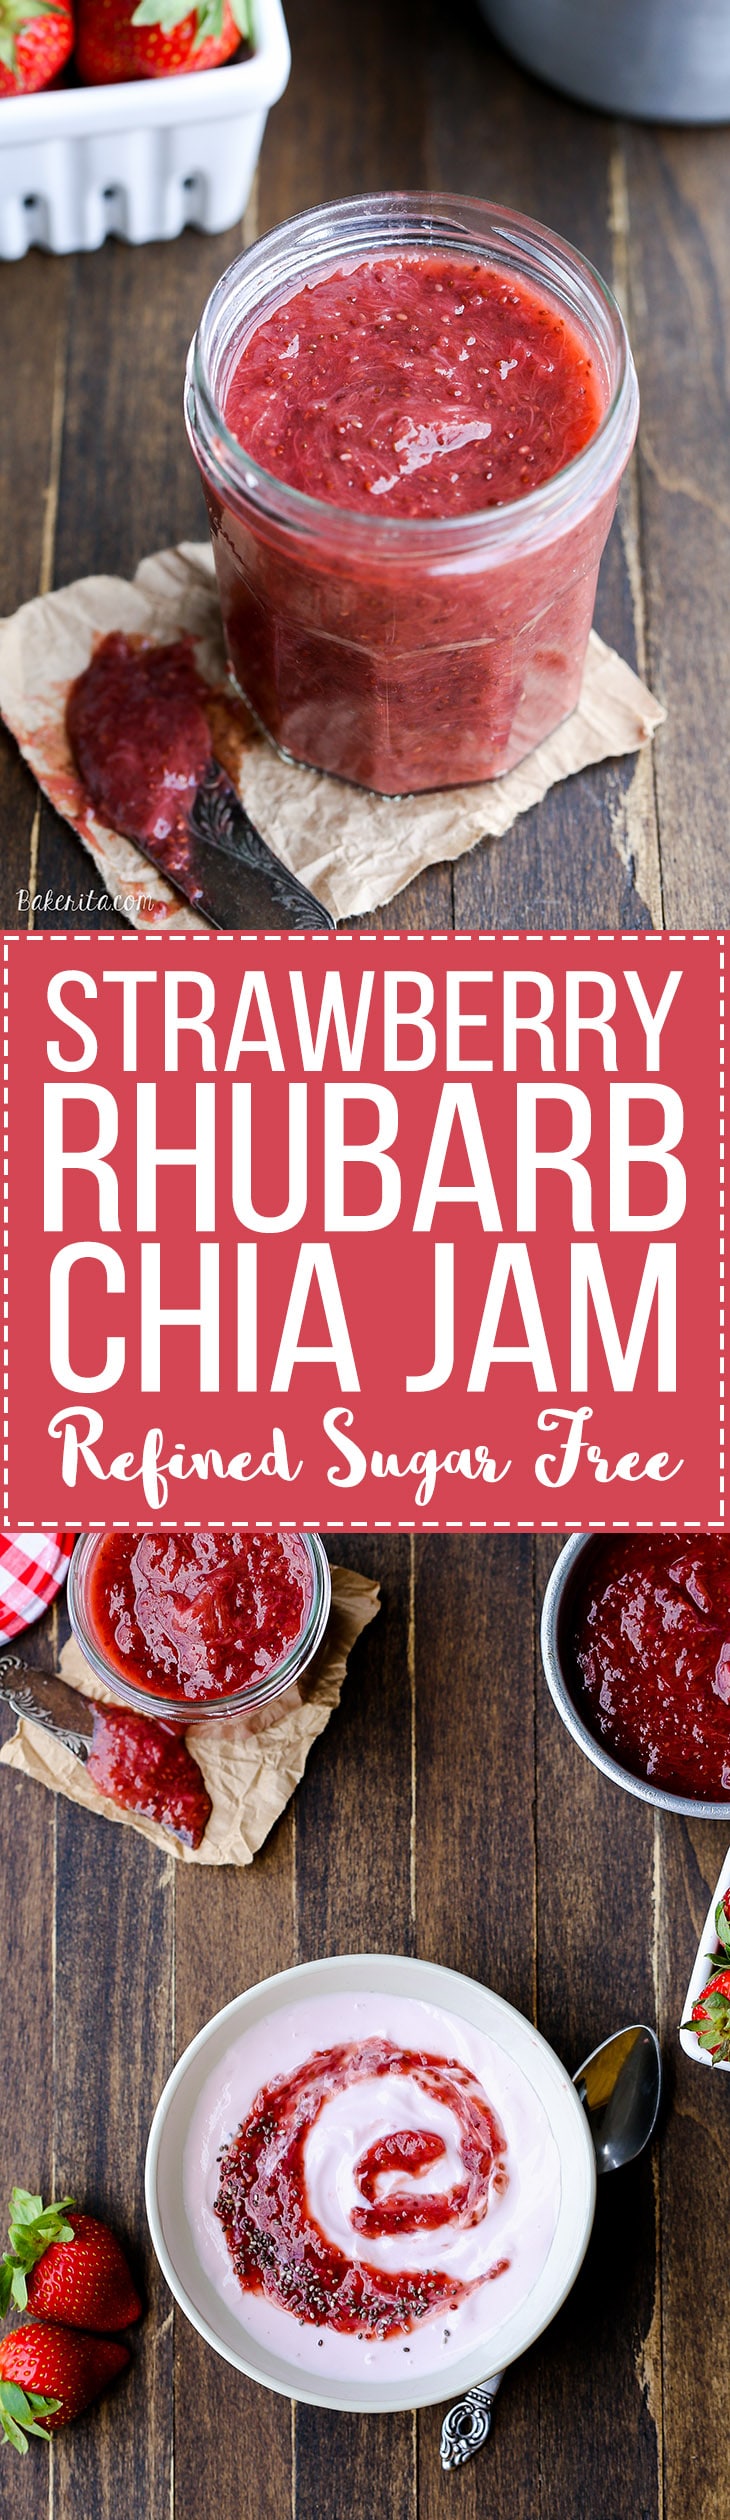 Strawberry Rhubarb Chia Jam Refined Sugar Free Bakerita,Best Hangover Cure 2019